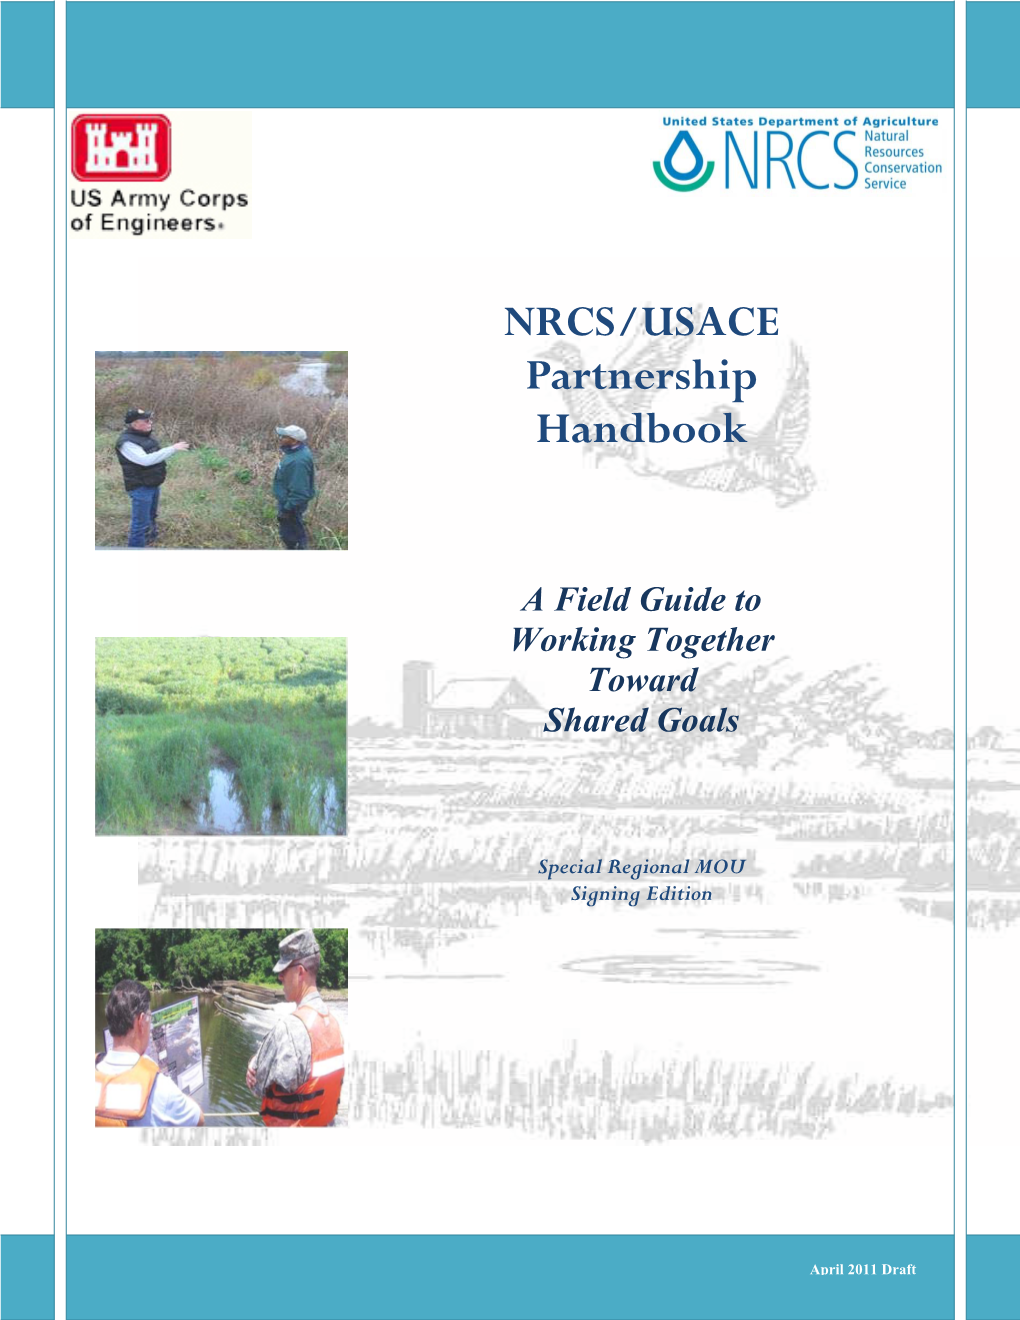 NRCS/USACE Partnership Handbook